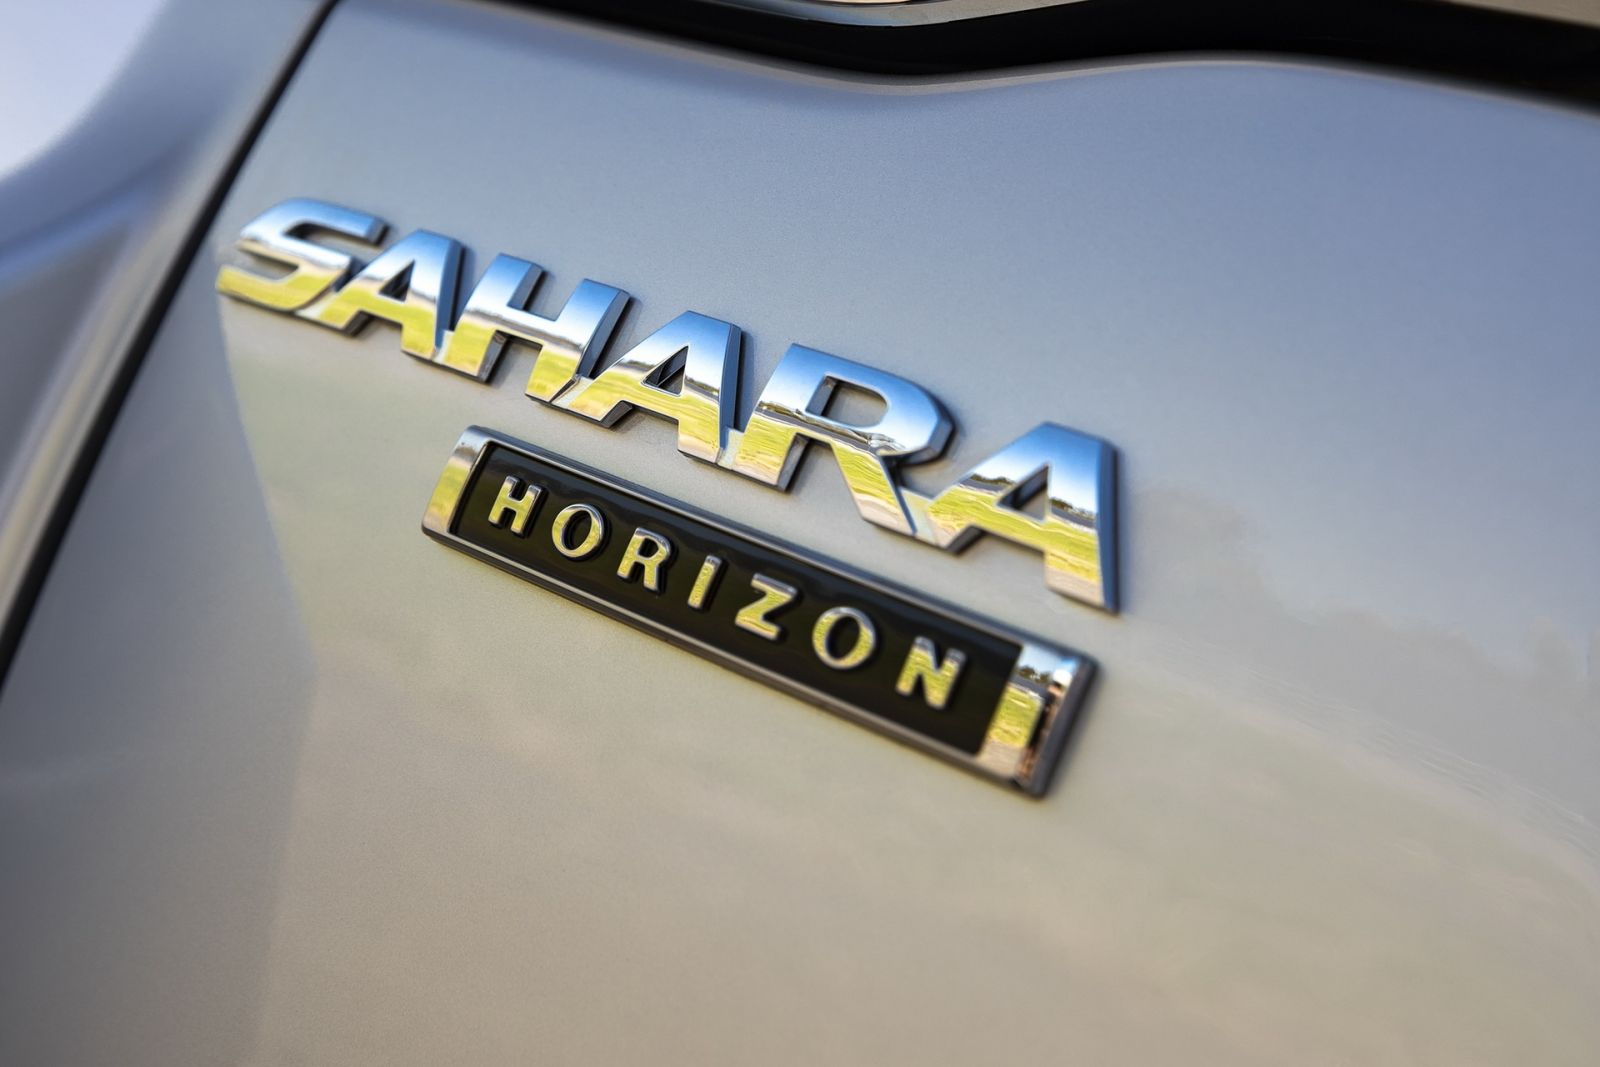 Toyota Land Cruiser Sahara Horizon